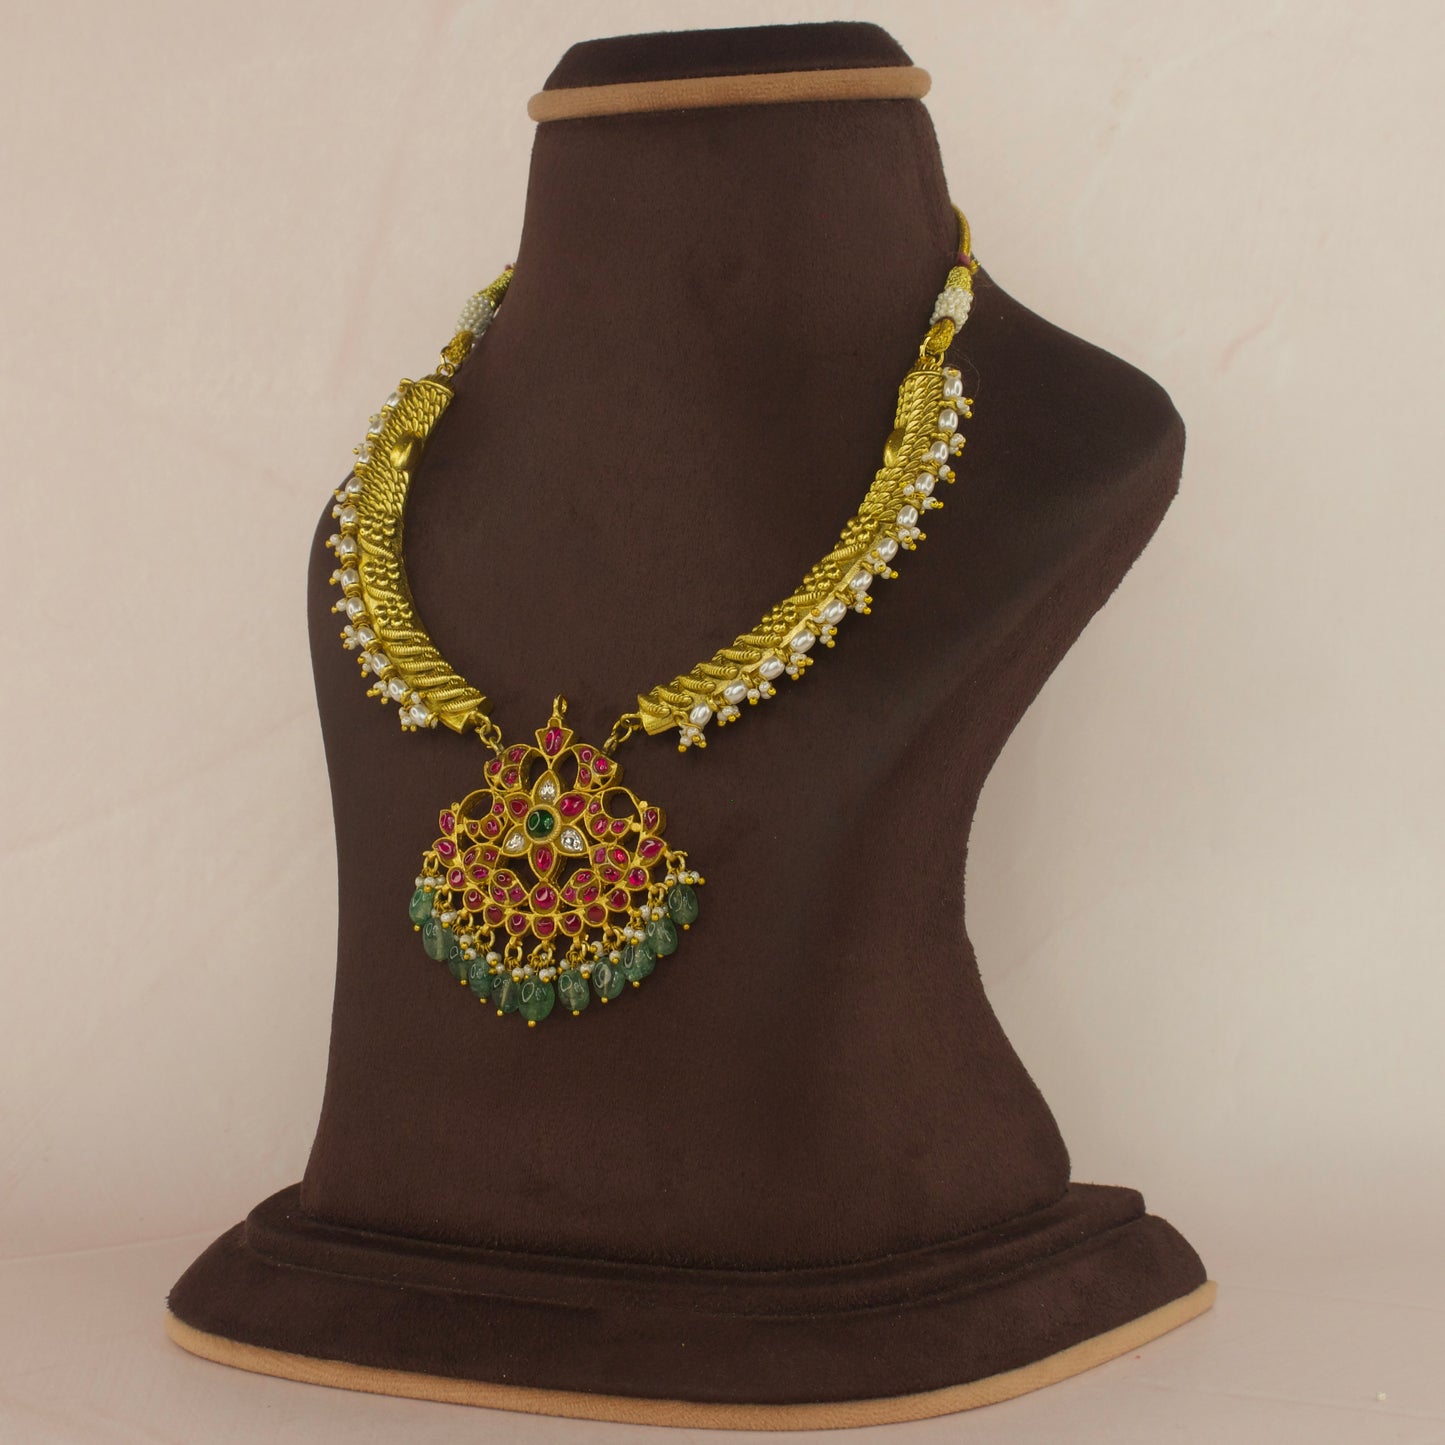 Regal Jadau Kundan Kanti Necklace with Floral Pendant with 22k gold plating this product belongs to Jadau kundan jewellery category